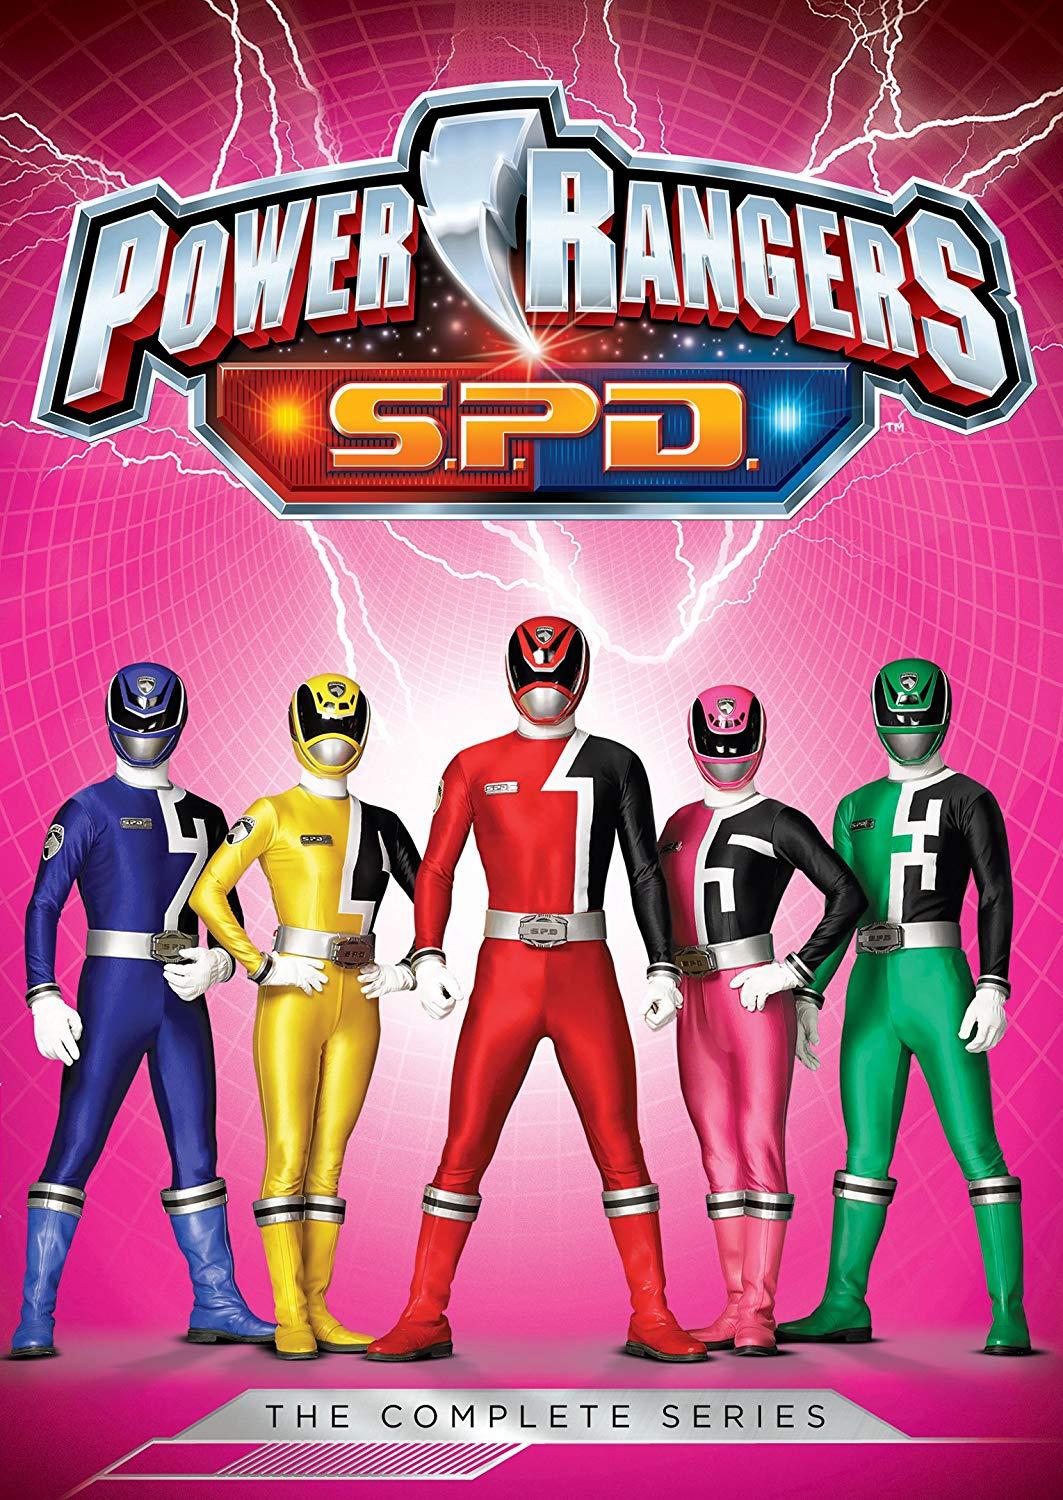 Power Rangers S.P.D. (TV Series 2005)